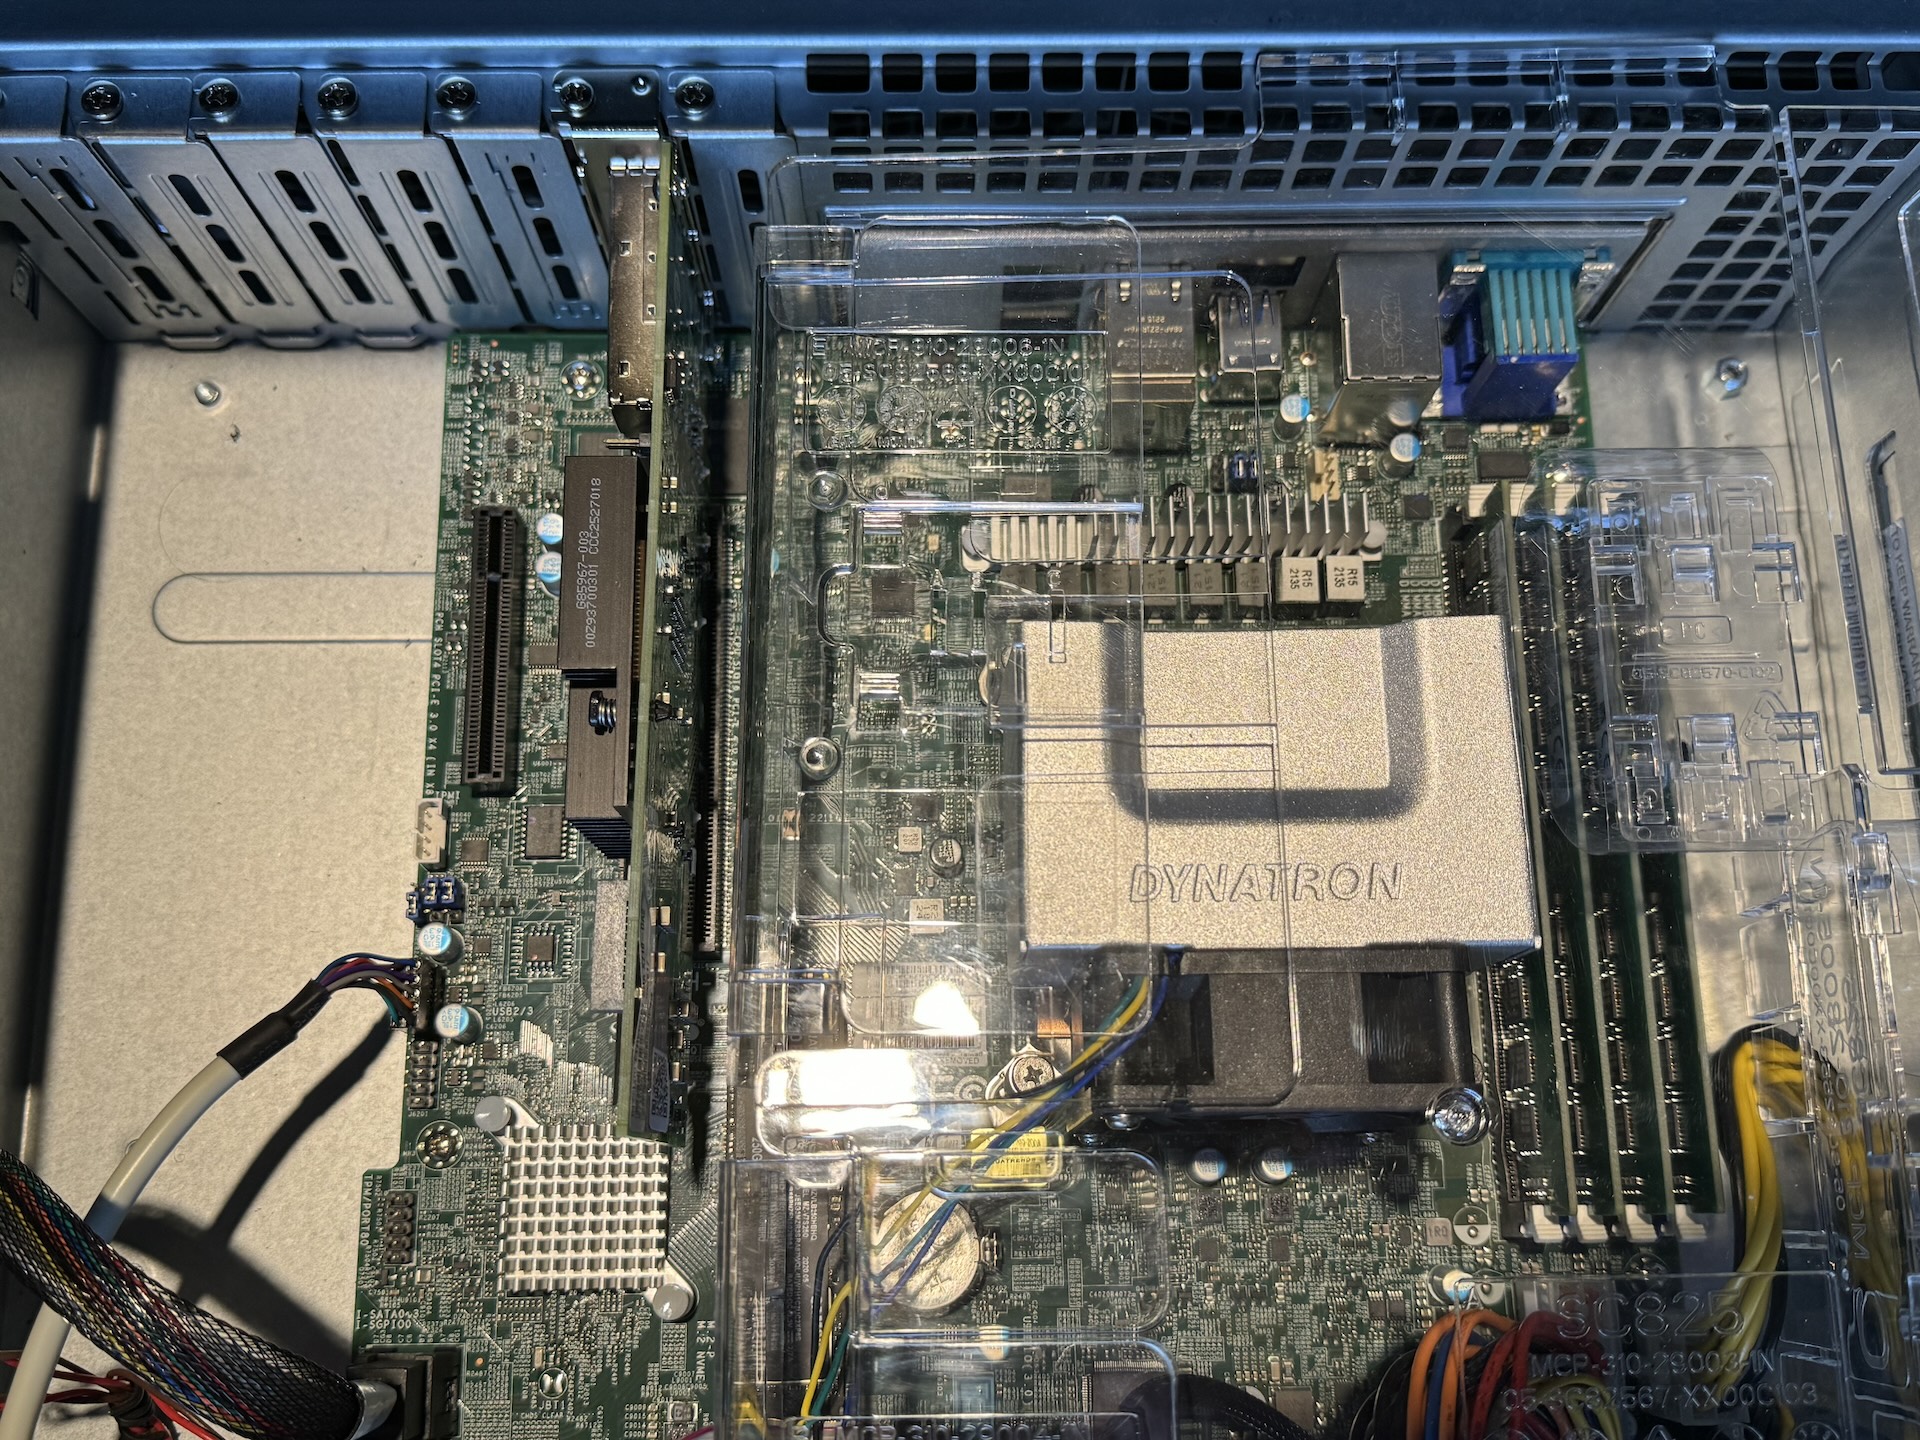 X12STH-F Motherboard, CPU PCIe Slot 6 with Intel X710-DA2